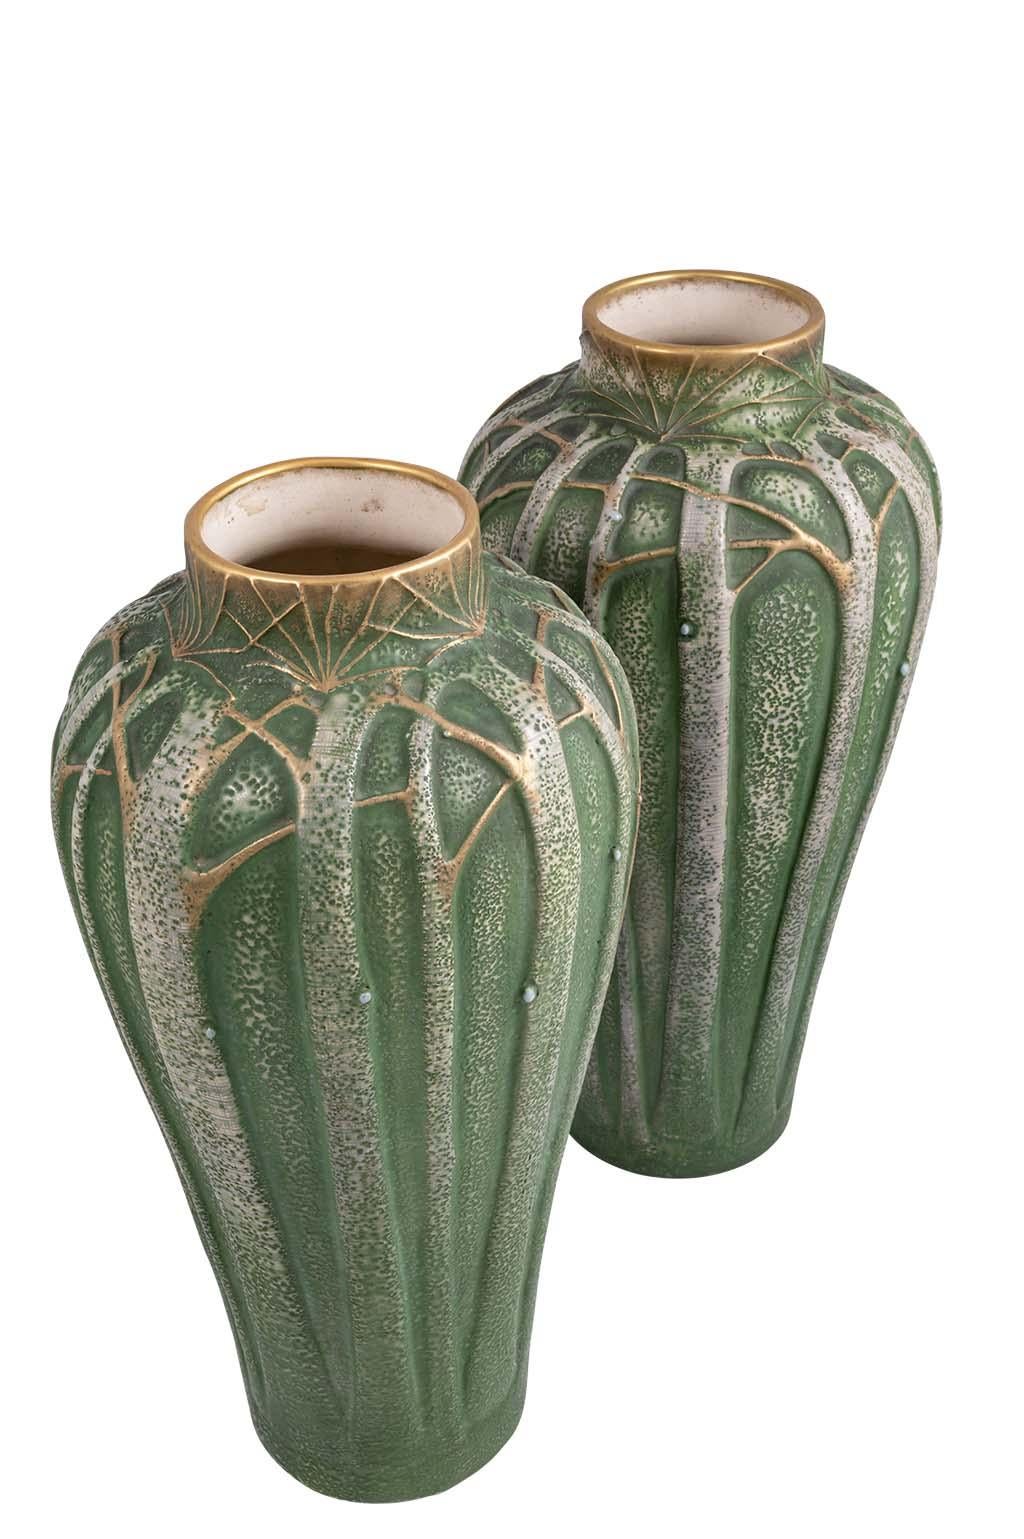 Jugendstil Pair of Vases Paul Dachsel Art Nouveau Amphora circa 1906 Ivory Porcelain Green